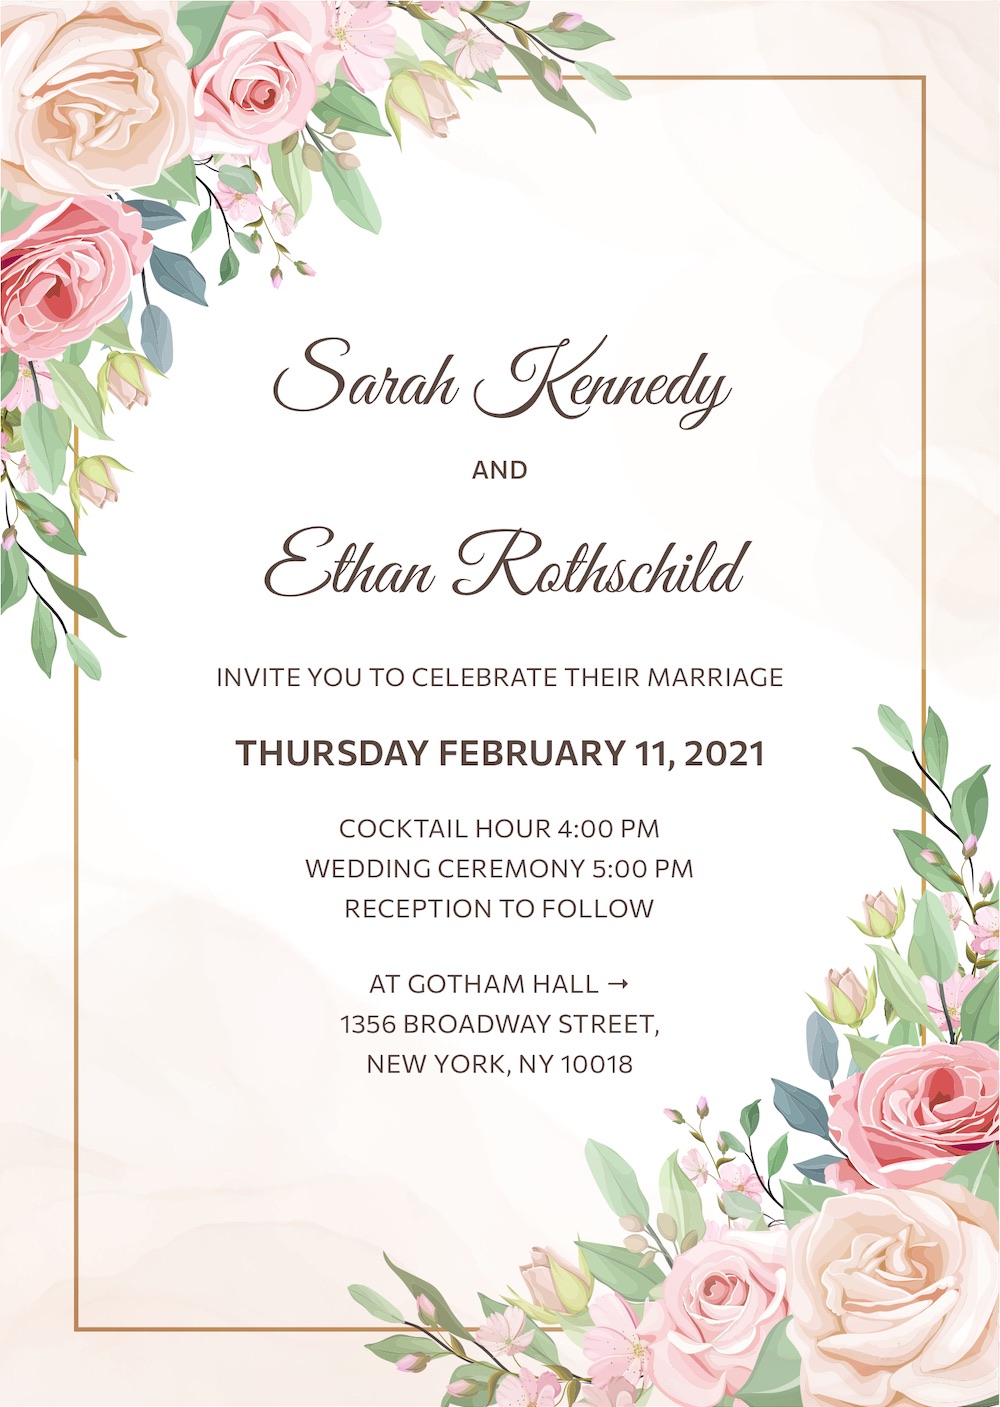 Luxury wedding bar mitzvah invitation with RSVP